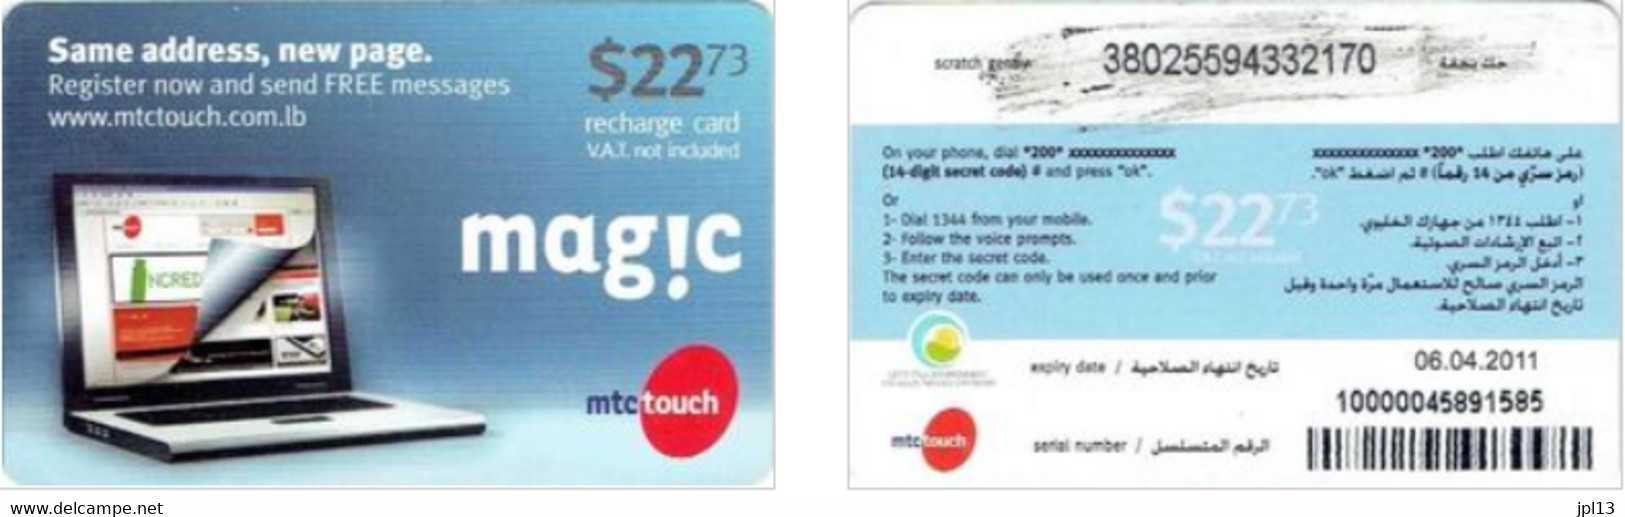 Recharge GSM - Liban - MTC Touch - Magic - Computer $22,73, Exp. 17/03/2011 - Libano